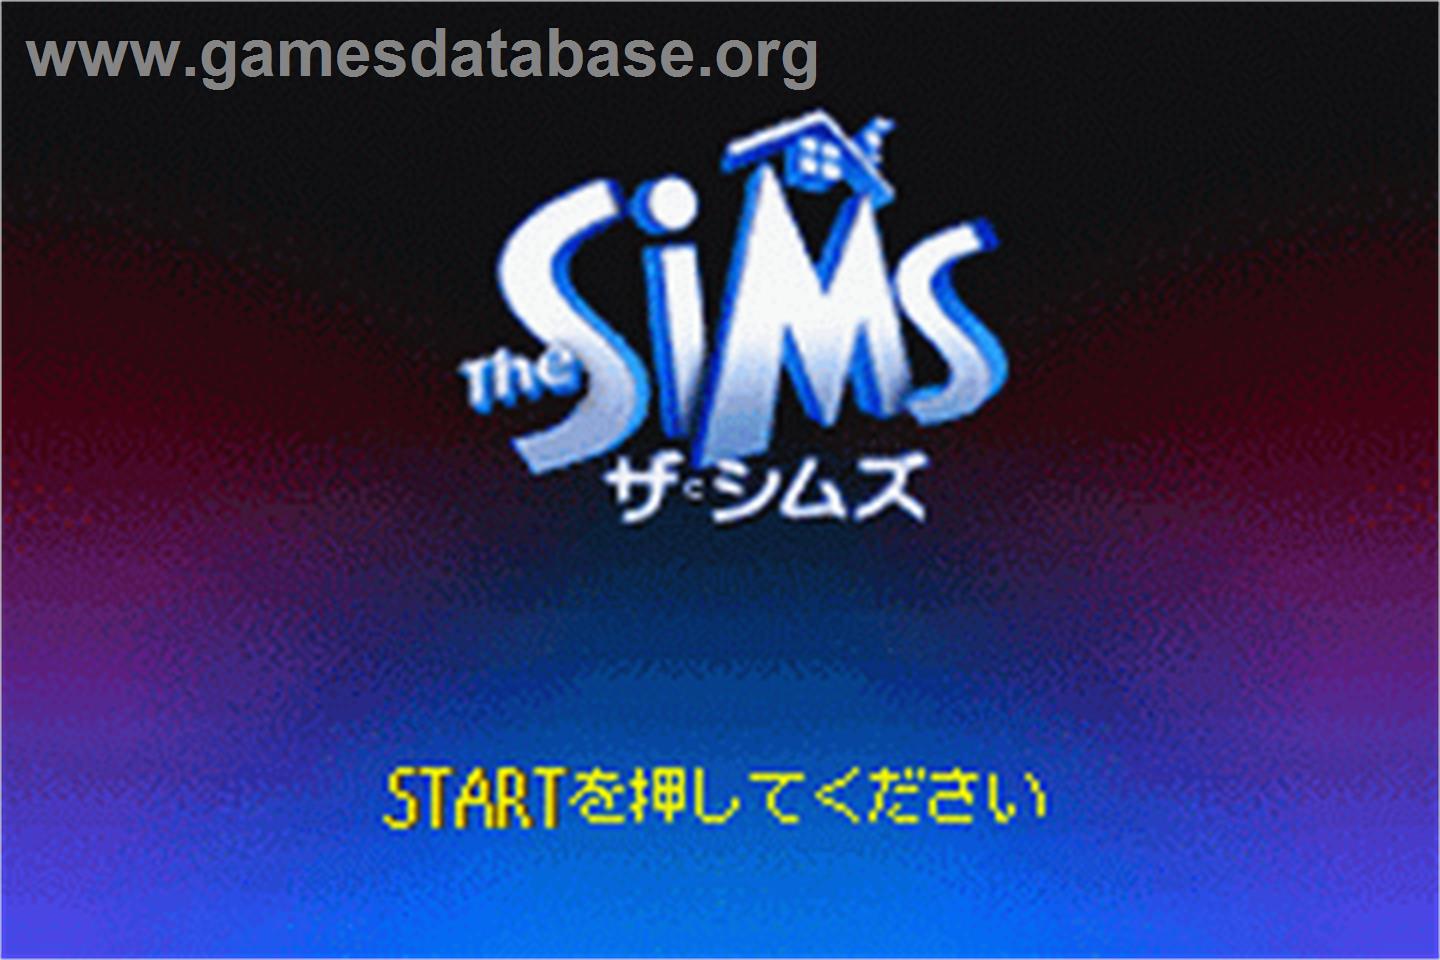 Sims - Nintendo Game Boy Advance - Artwork - Title Screen